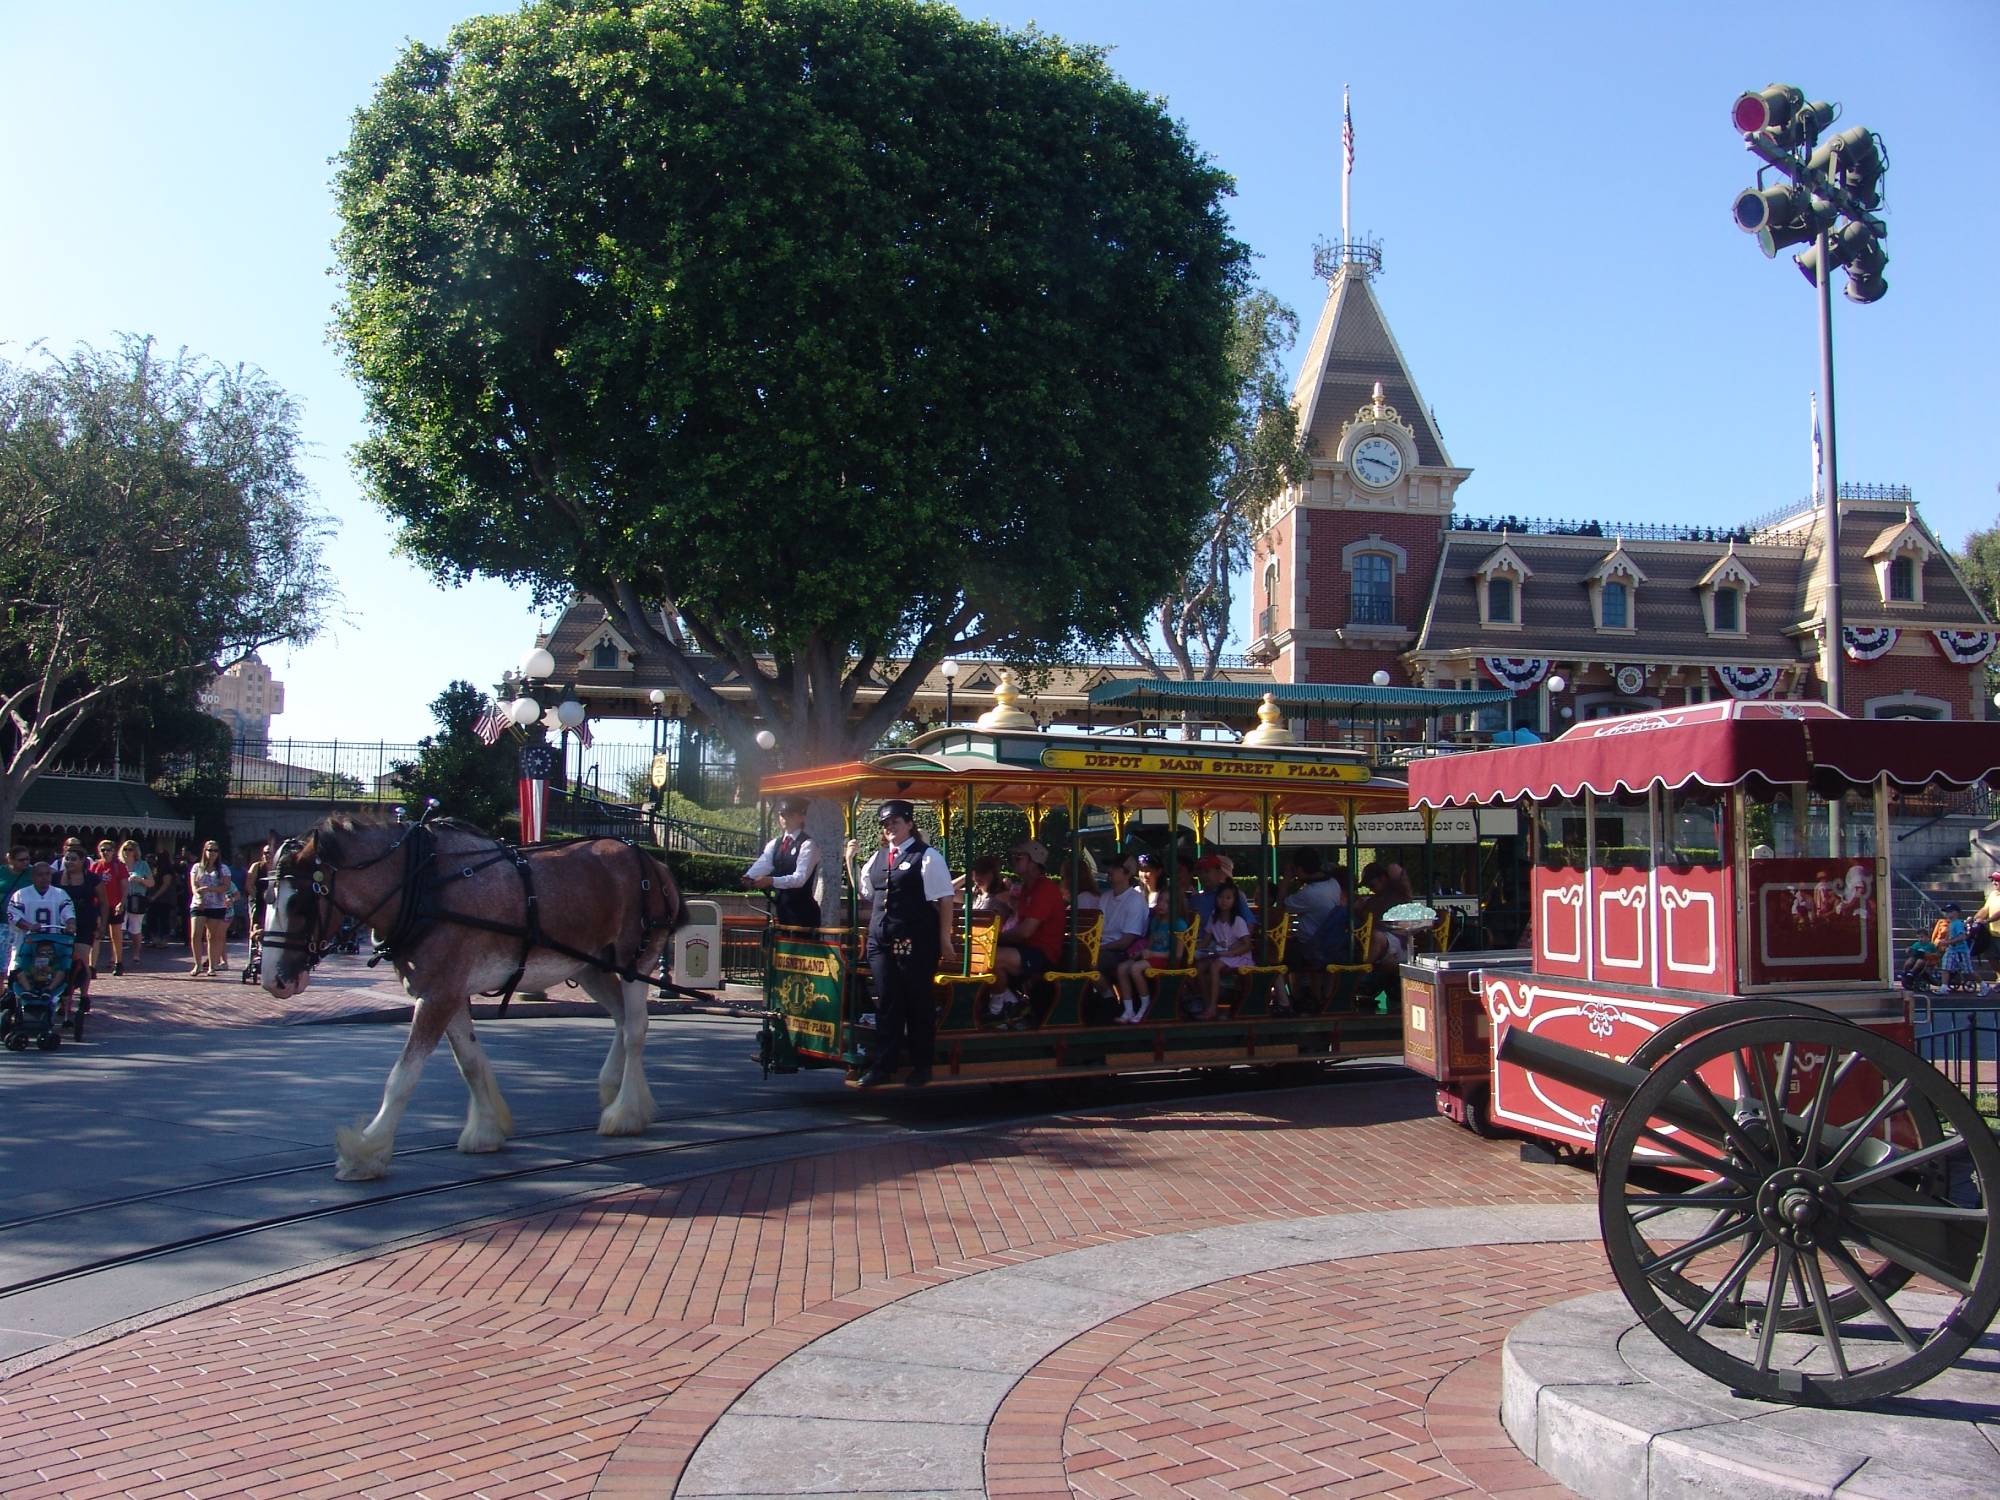 Share memories of Disneyland back in the mid-20th Century | PassPorter.com